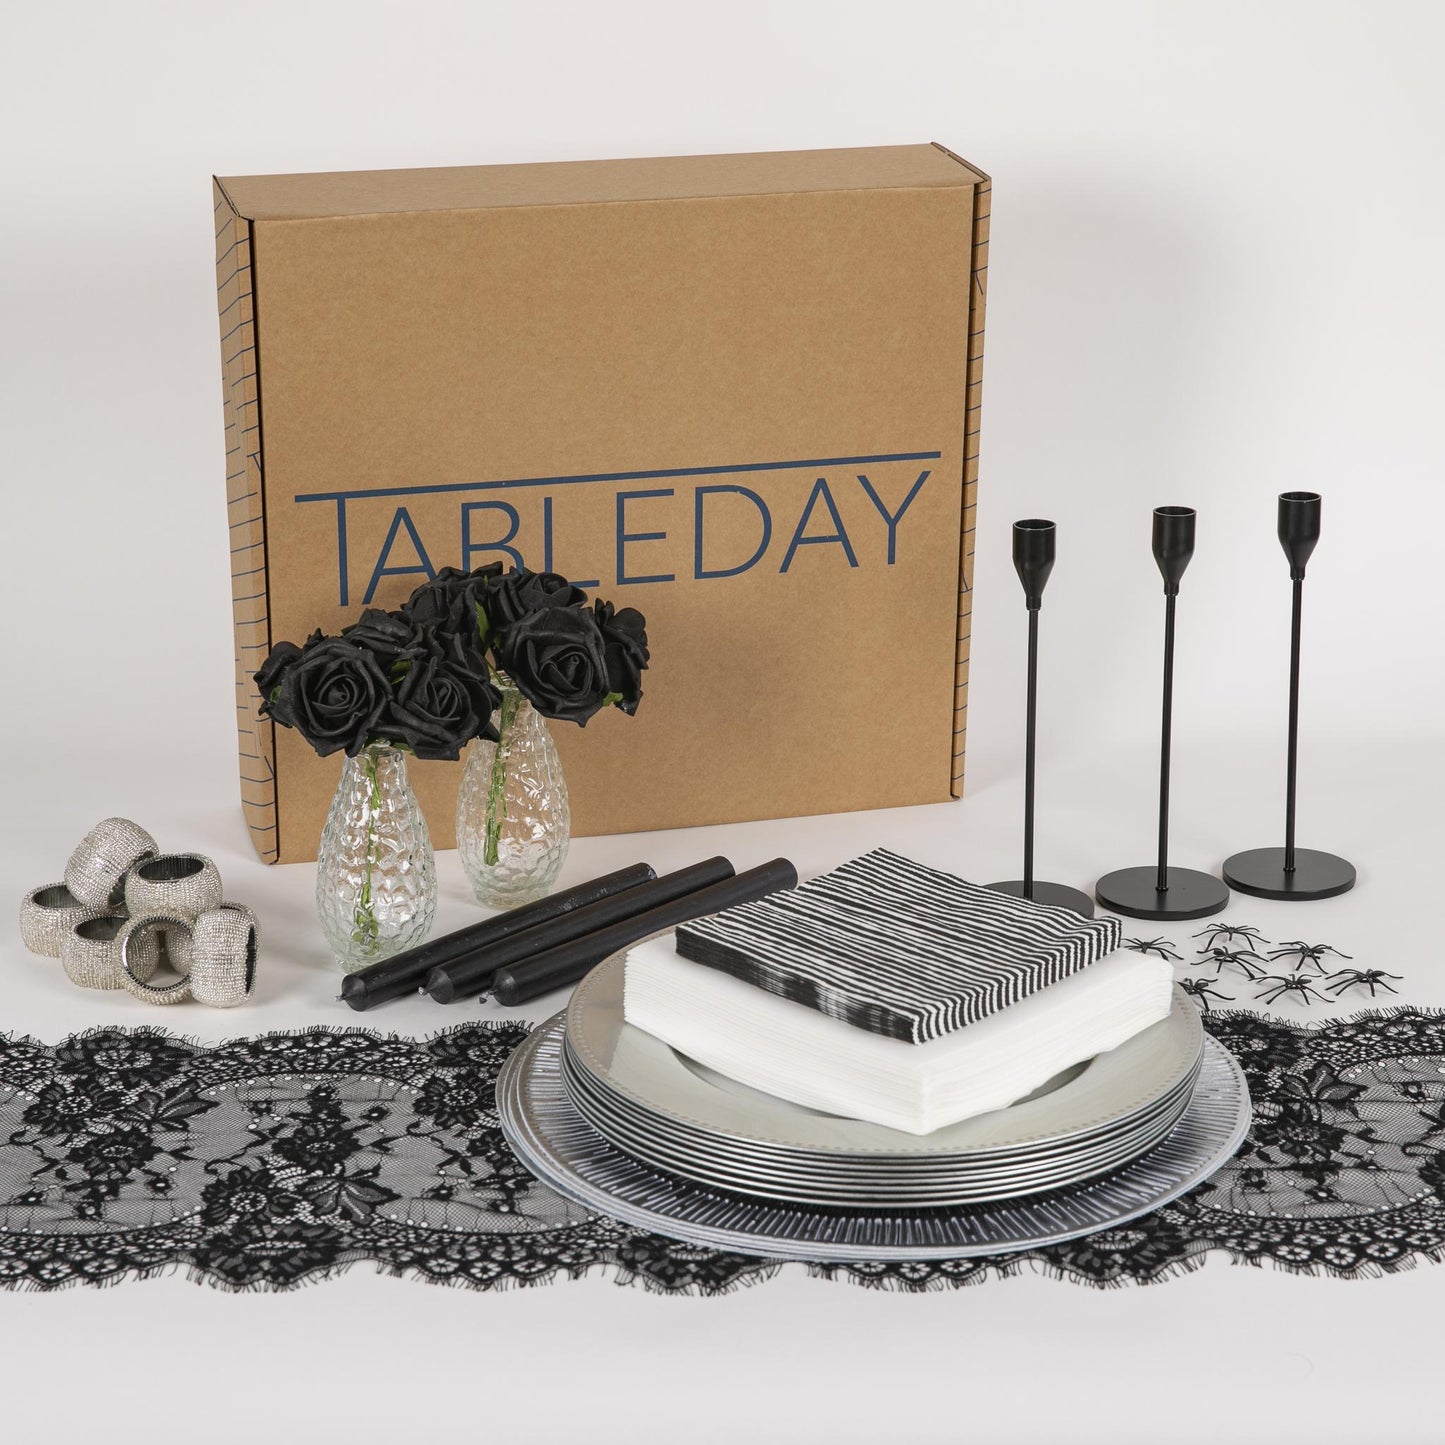 Gothic Halloween Table Setting Kit - Tableday